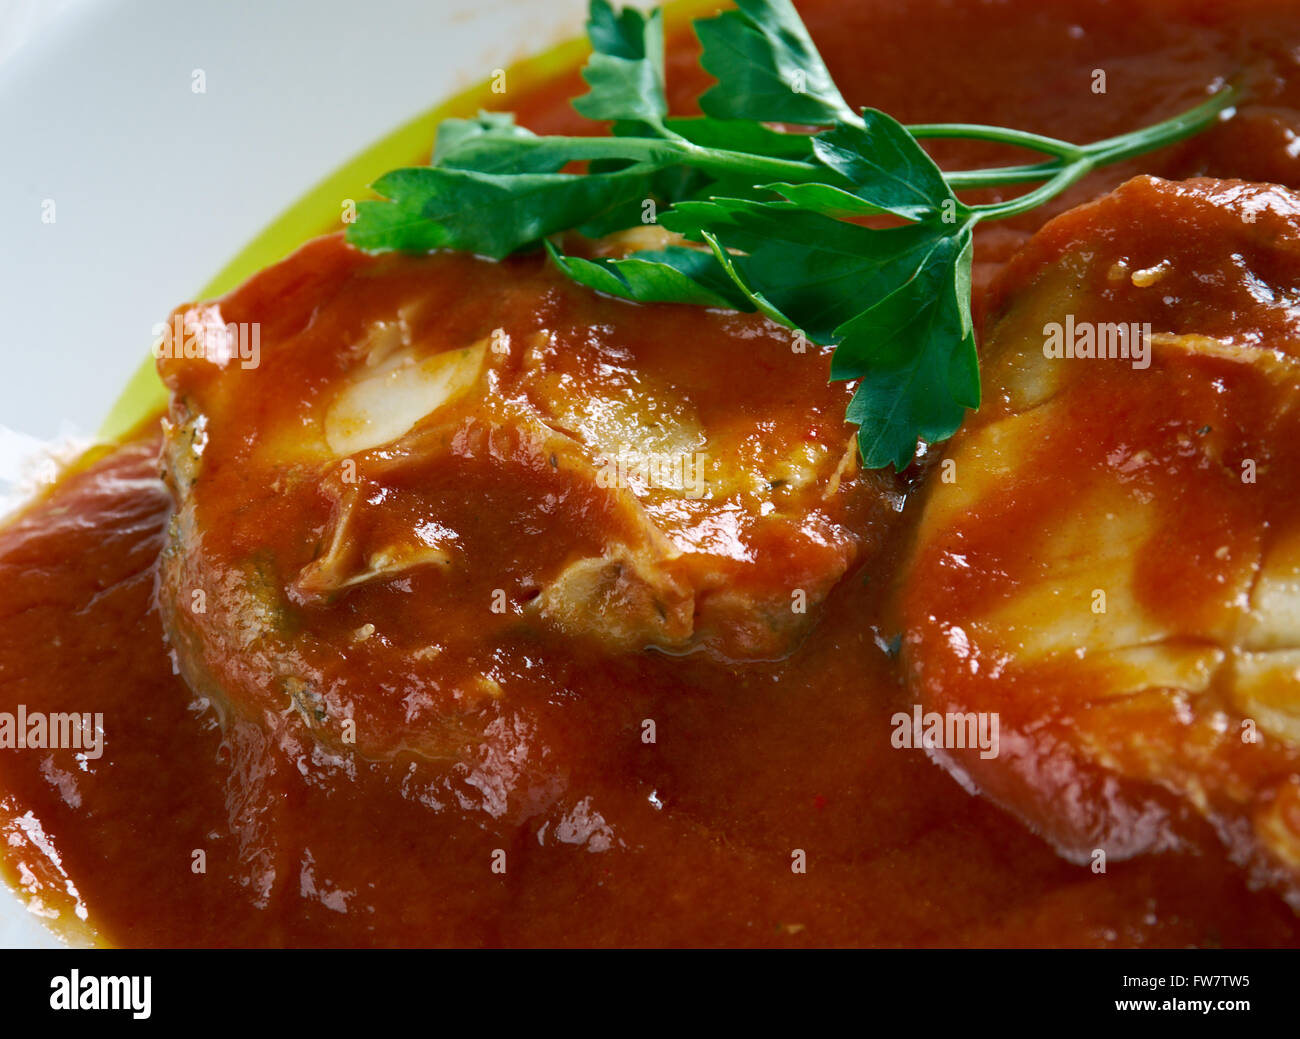 Haraimi  Libyan spicy fish dish.Maghreb cuisine Stock Photo